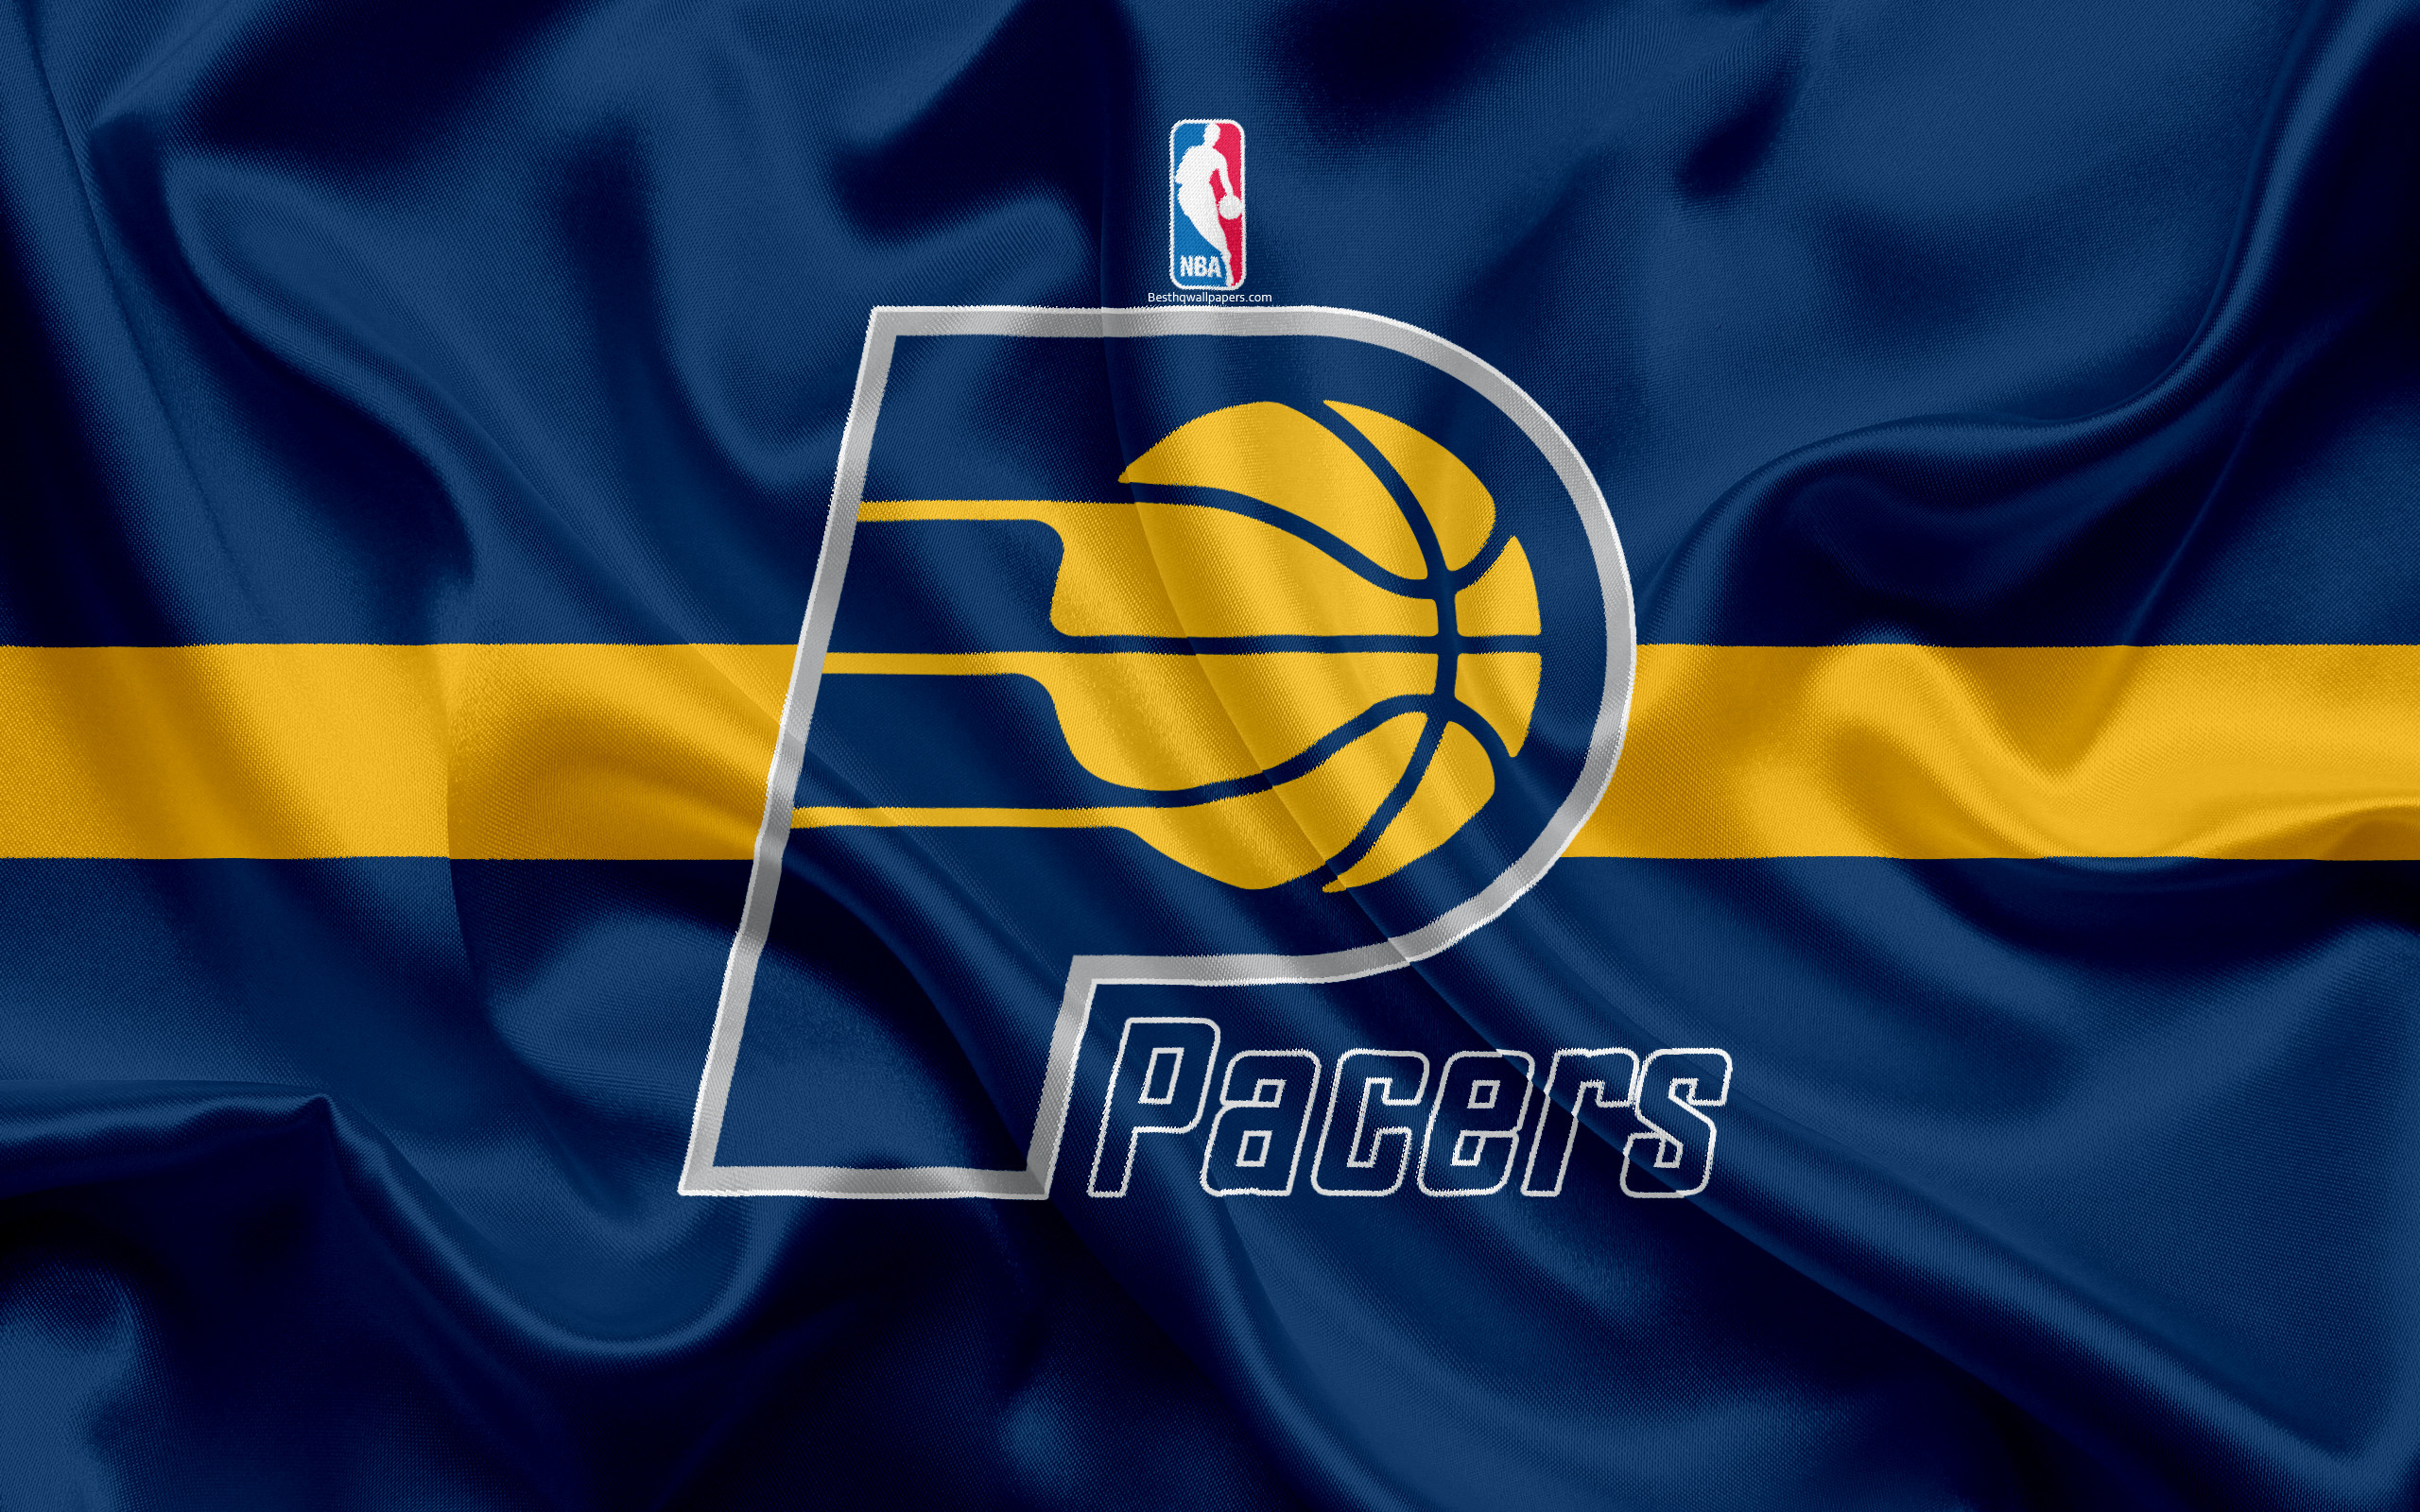 2560x1600 Indiana Pacers, basketball club, NBA, emblem, logo, USA, National Basketball